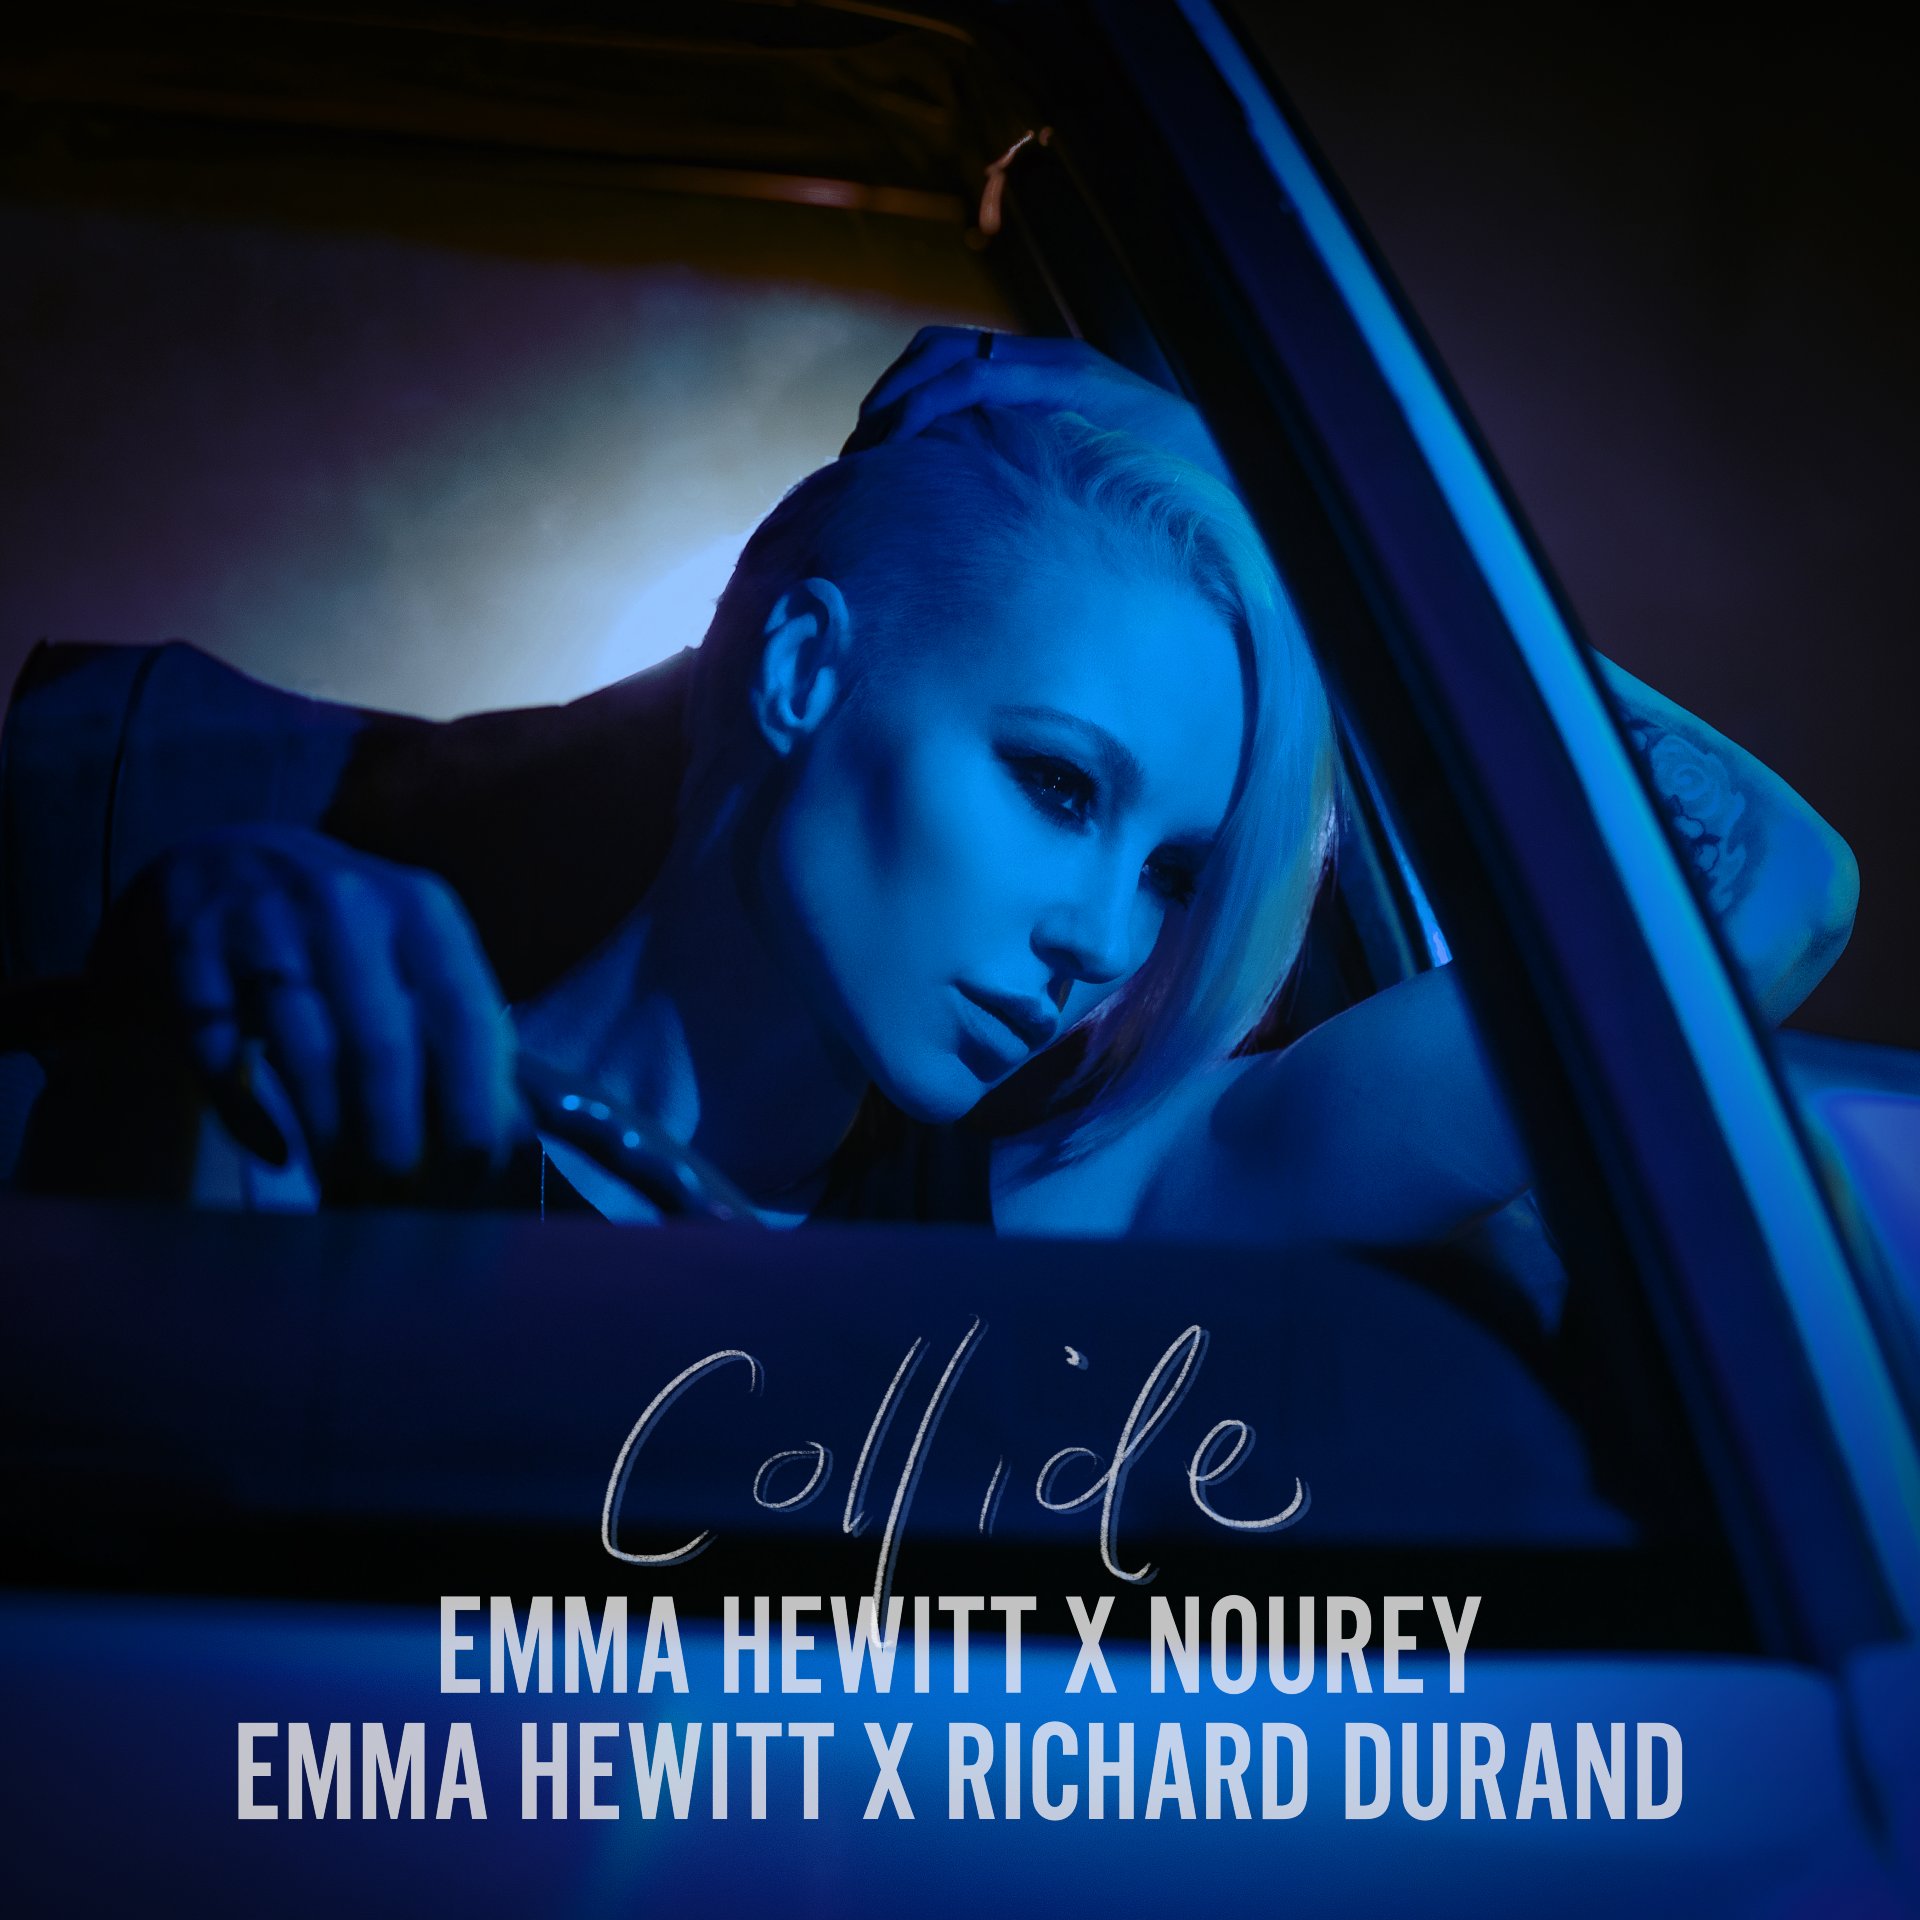 Emma Hewitt x Nourey x Richard Durand presents Collide on Black Hole Recordings